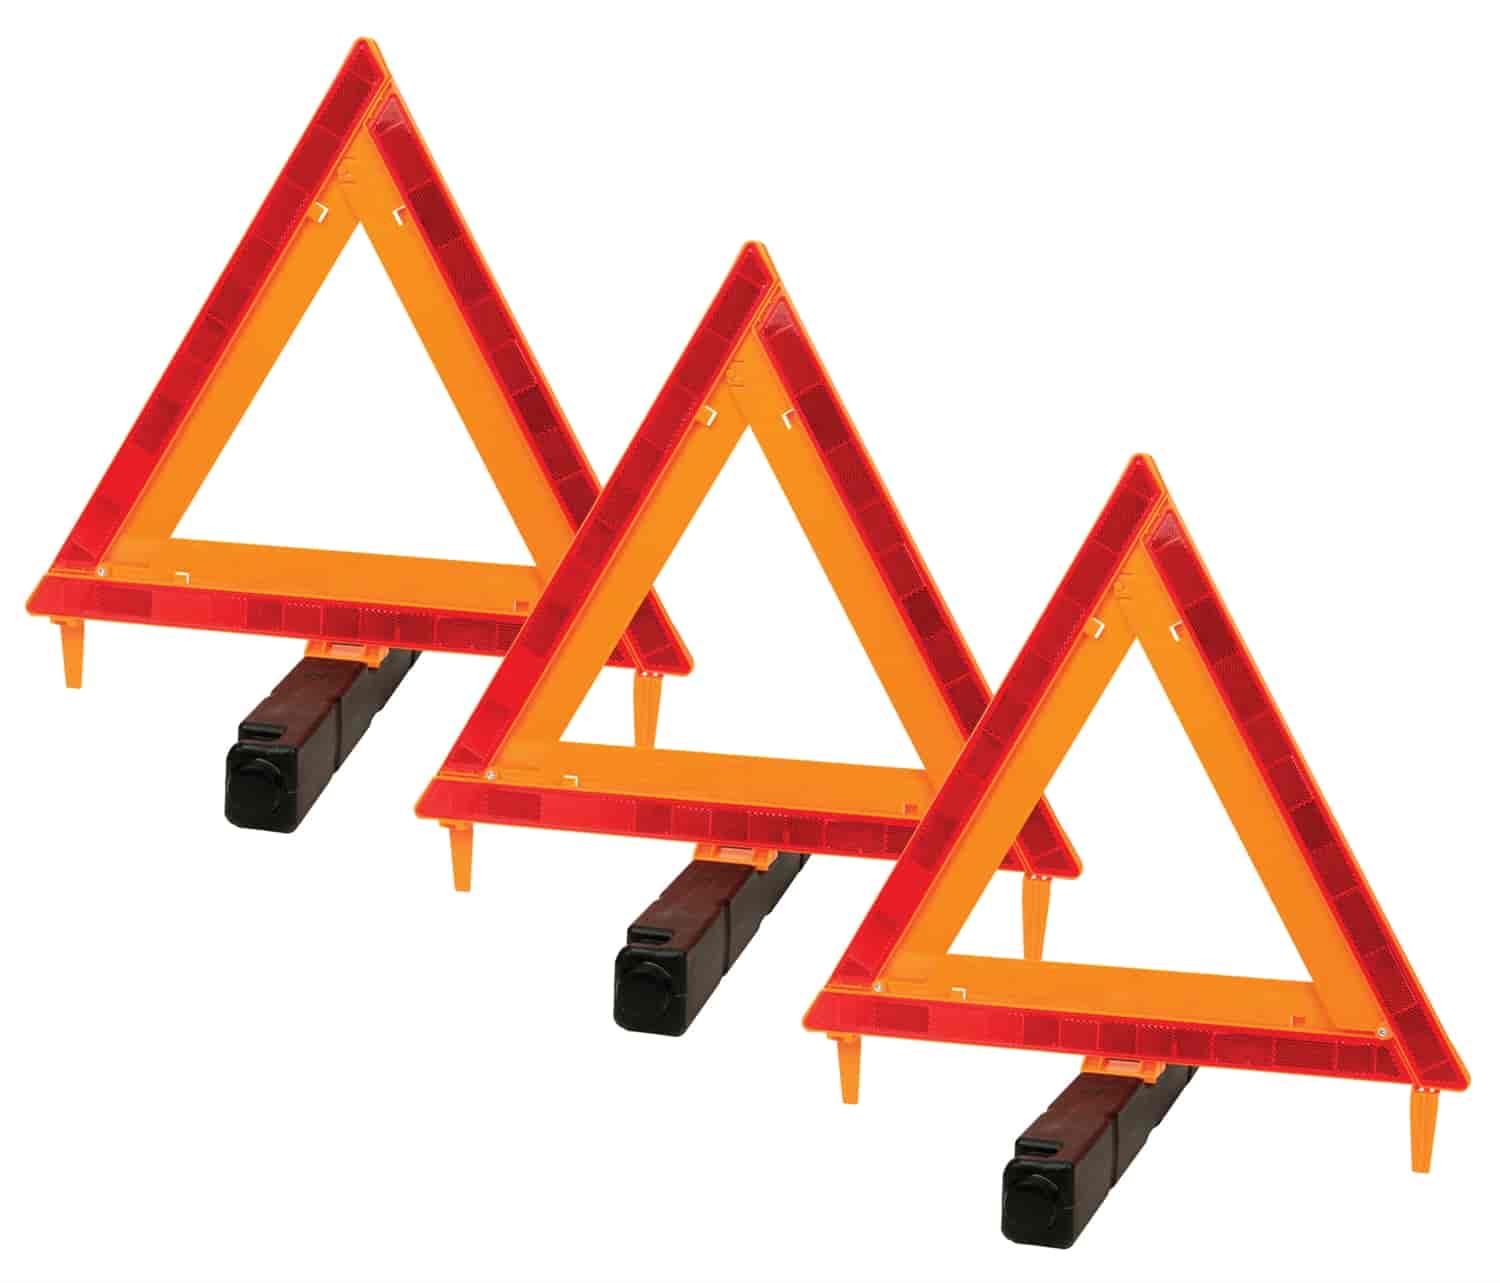 DOT Warning Triangle Set [3 pack]